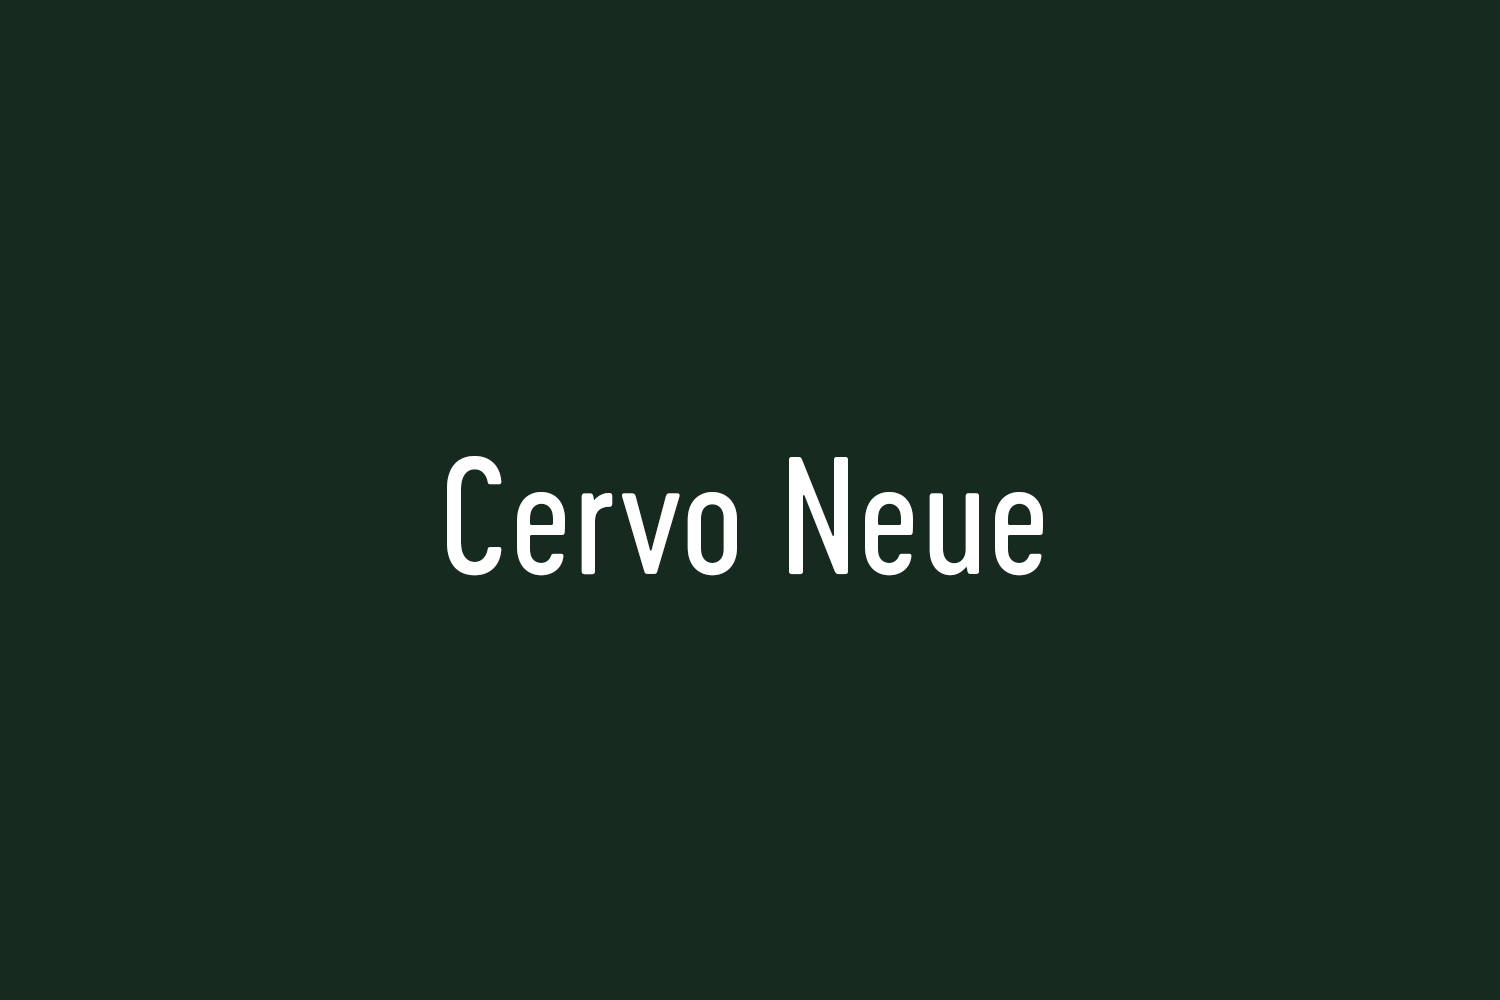 Cervo Neue